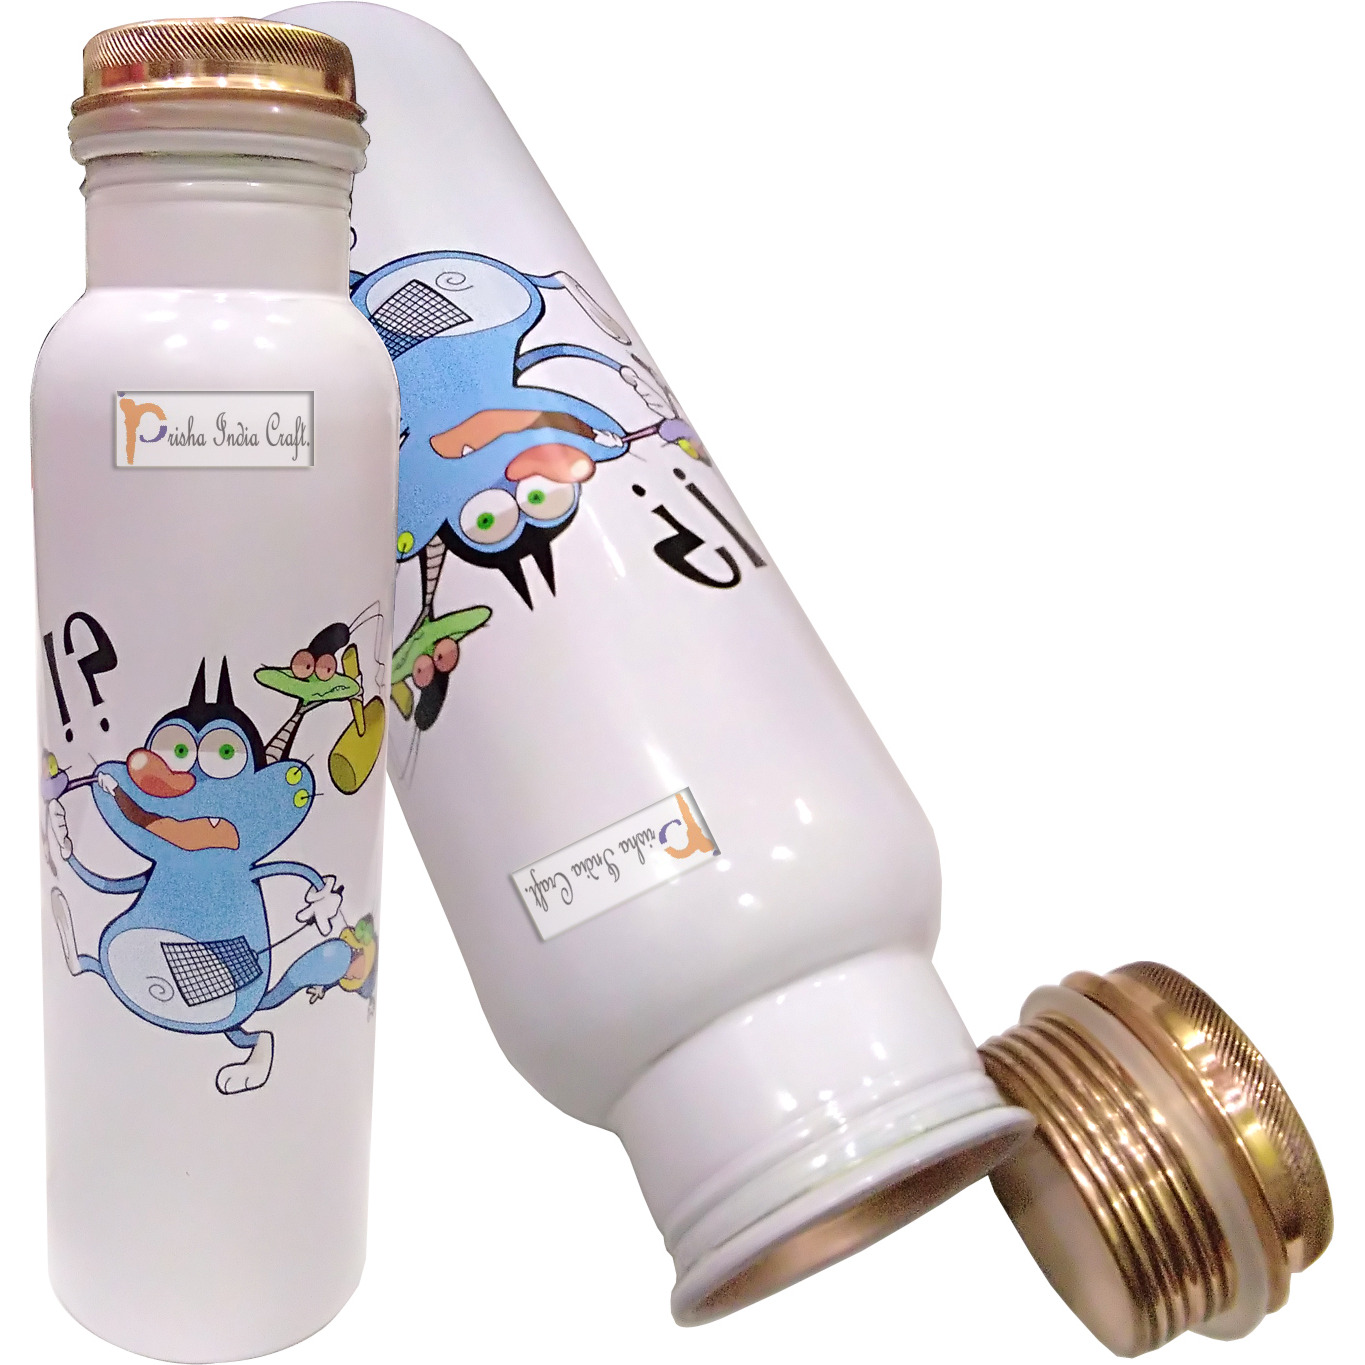 Prisha India Craft Digital Printed Pure Copper Water Bottle Kids School Water Bottle - Oggy Design, 1000 ML |Set of 2